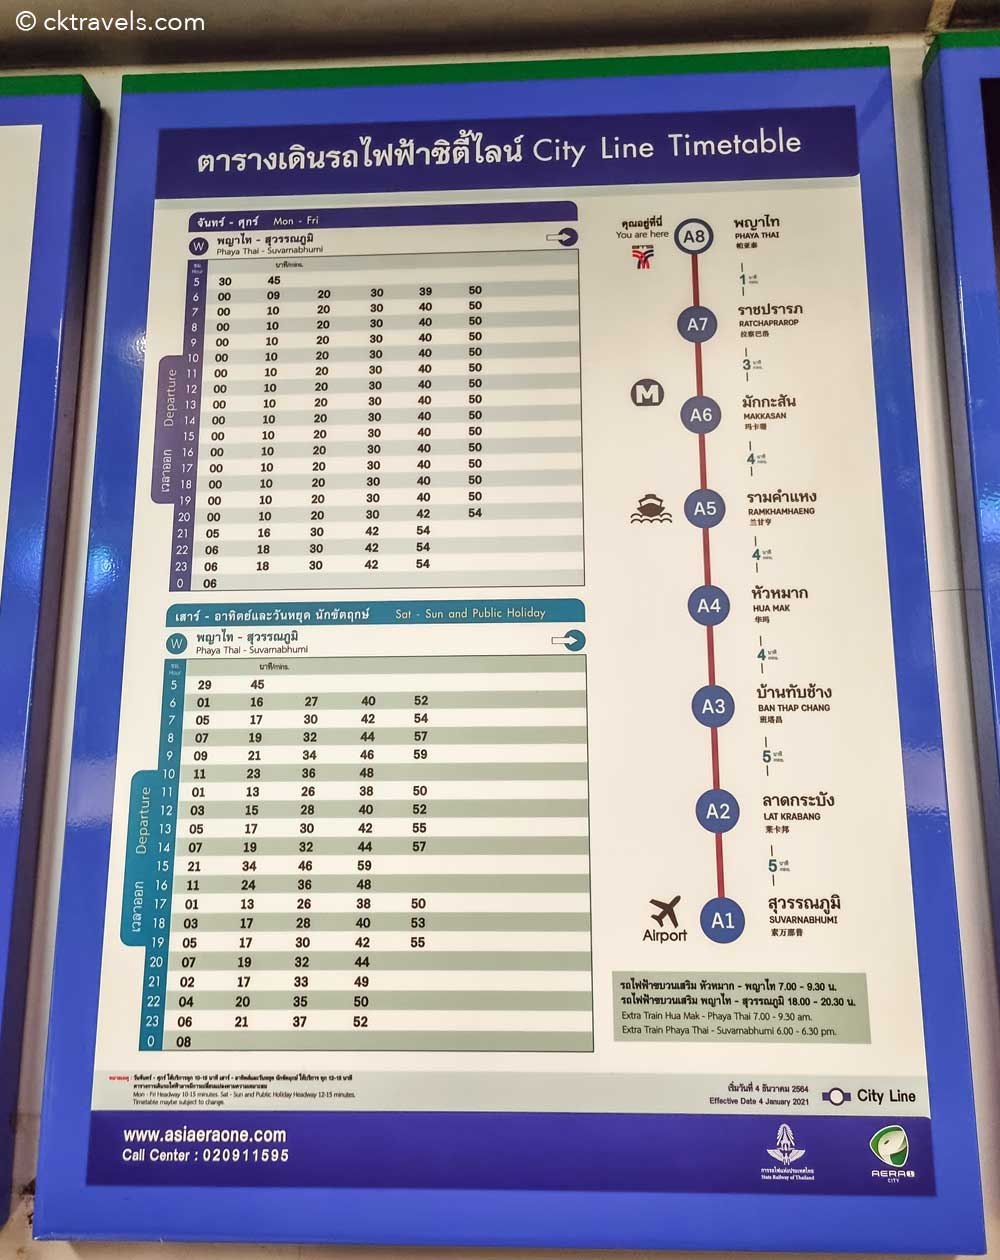 Bangkok Airport Rail Link train timetable